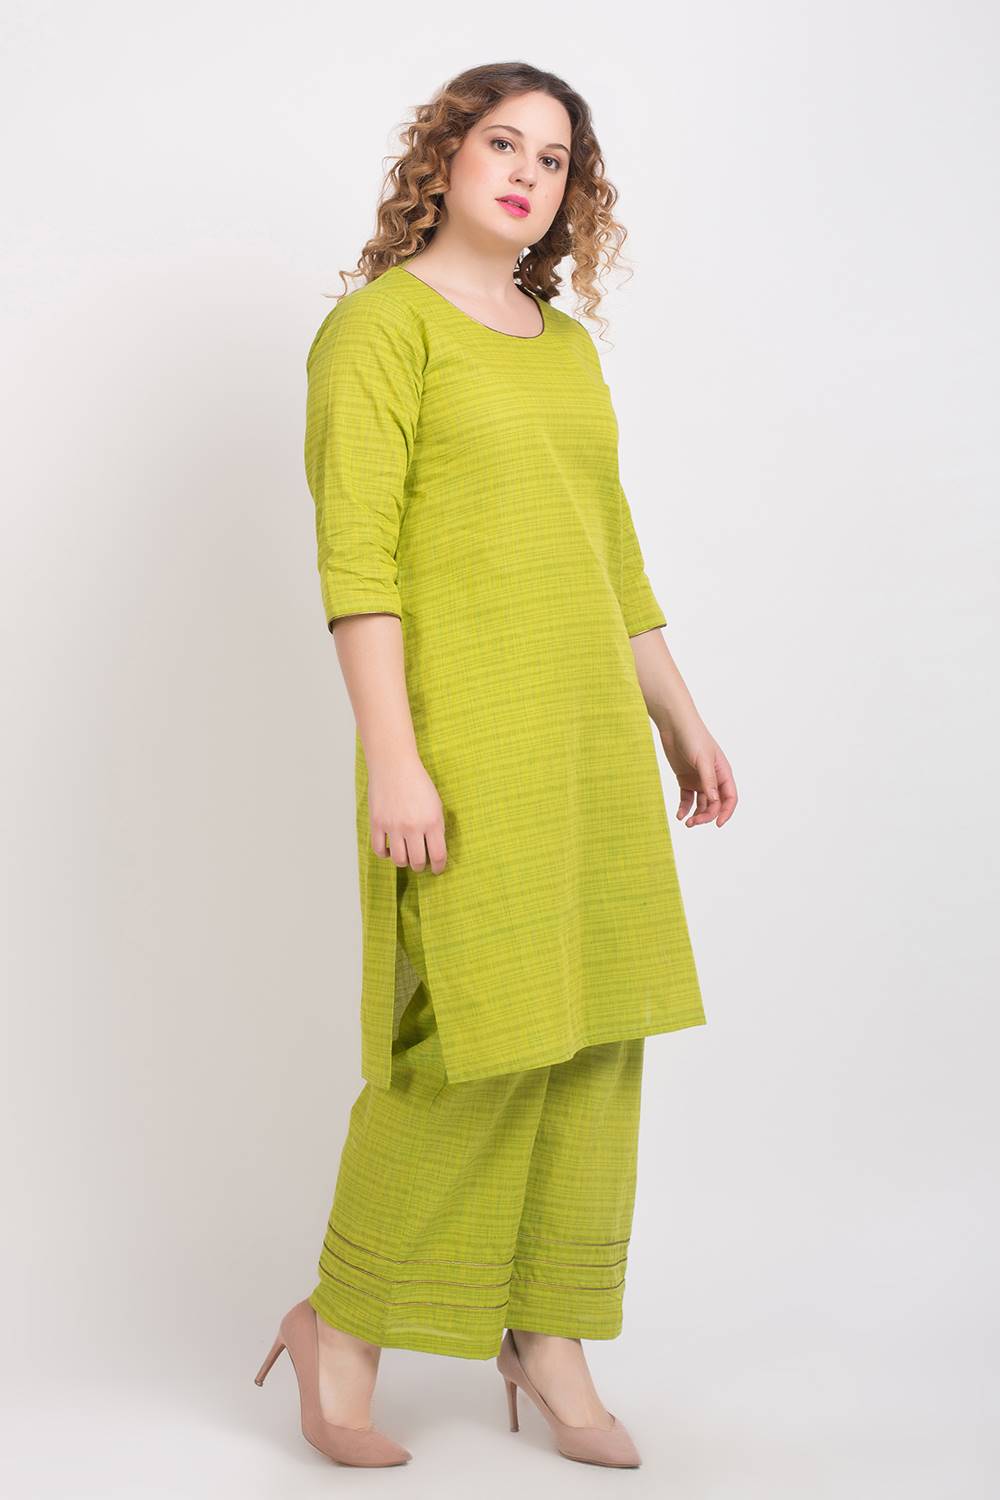 Solid Green Handloom Cotton Kurti5